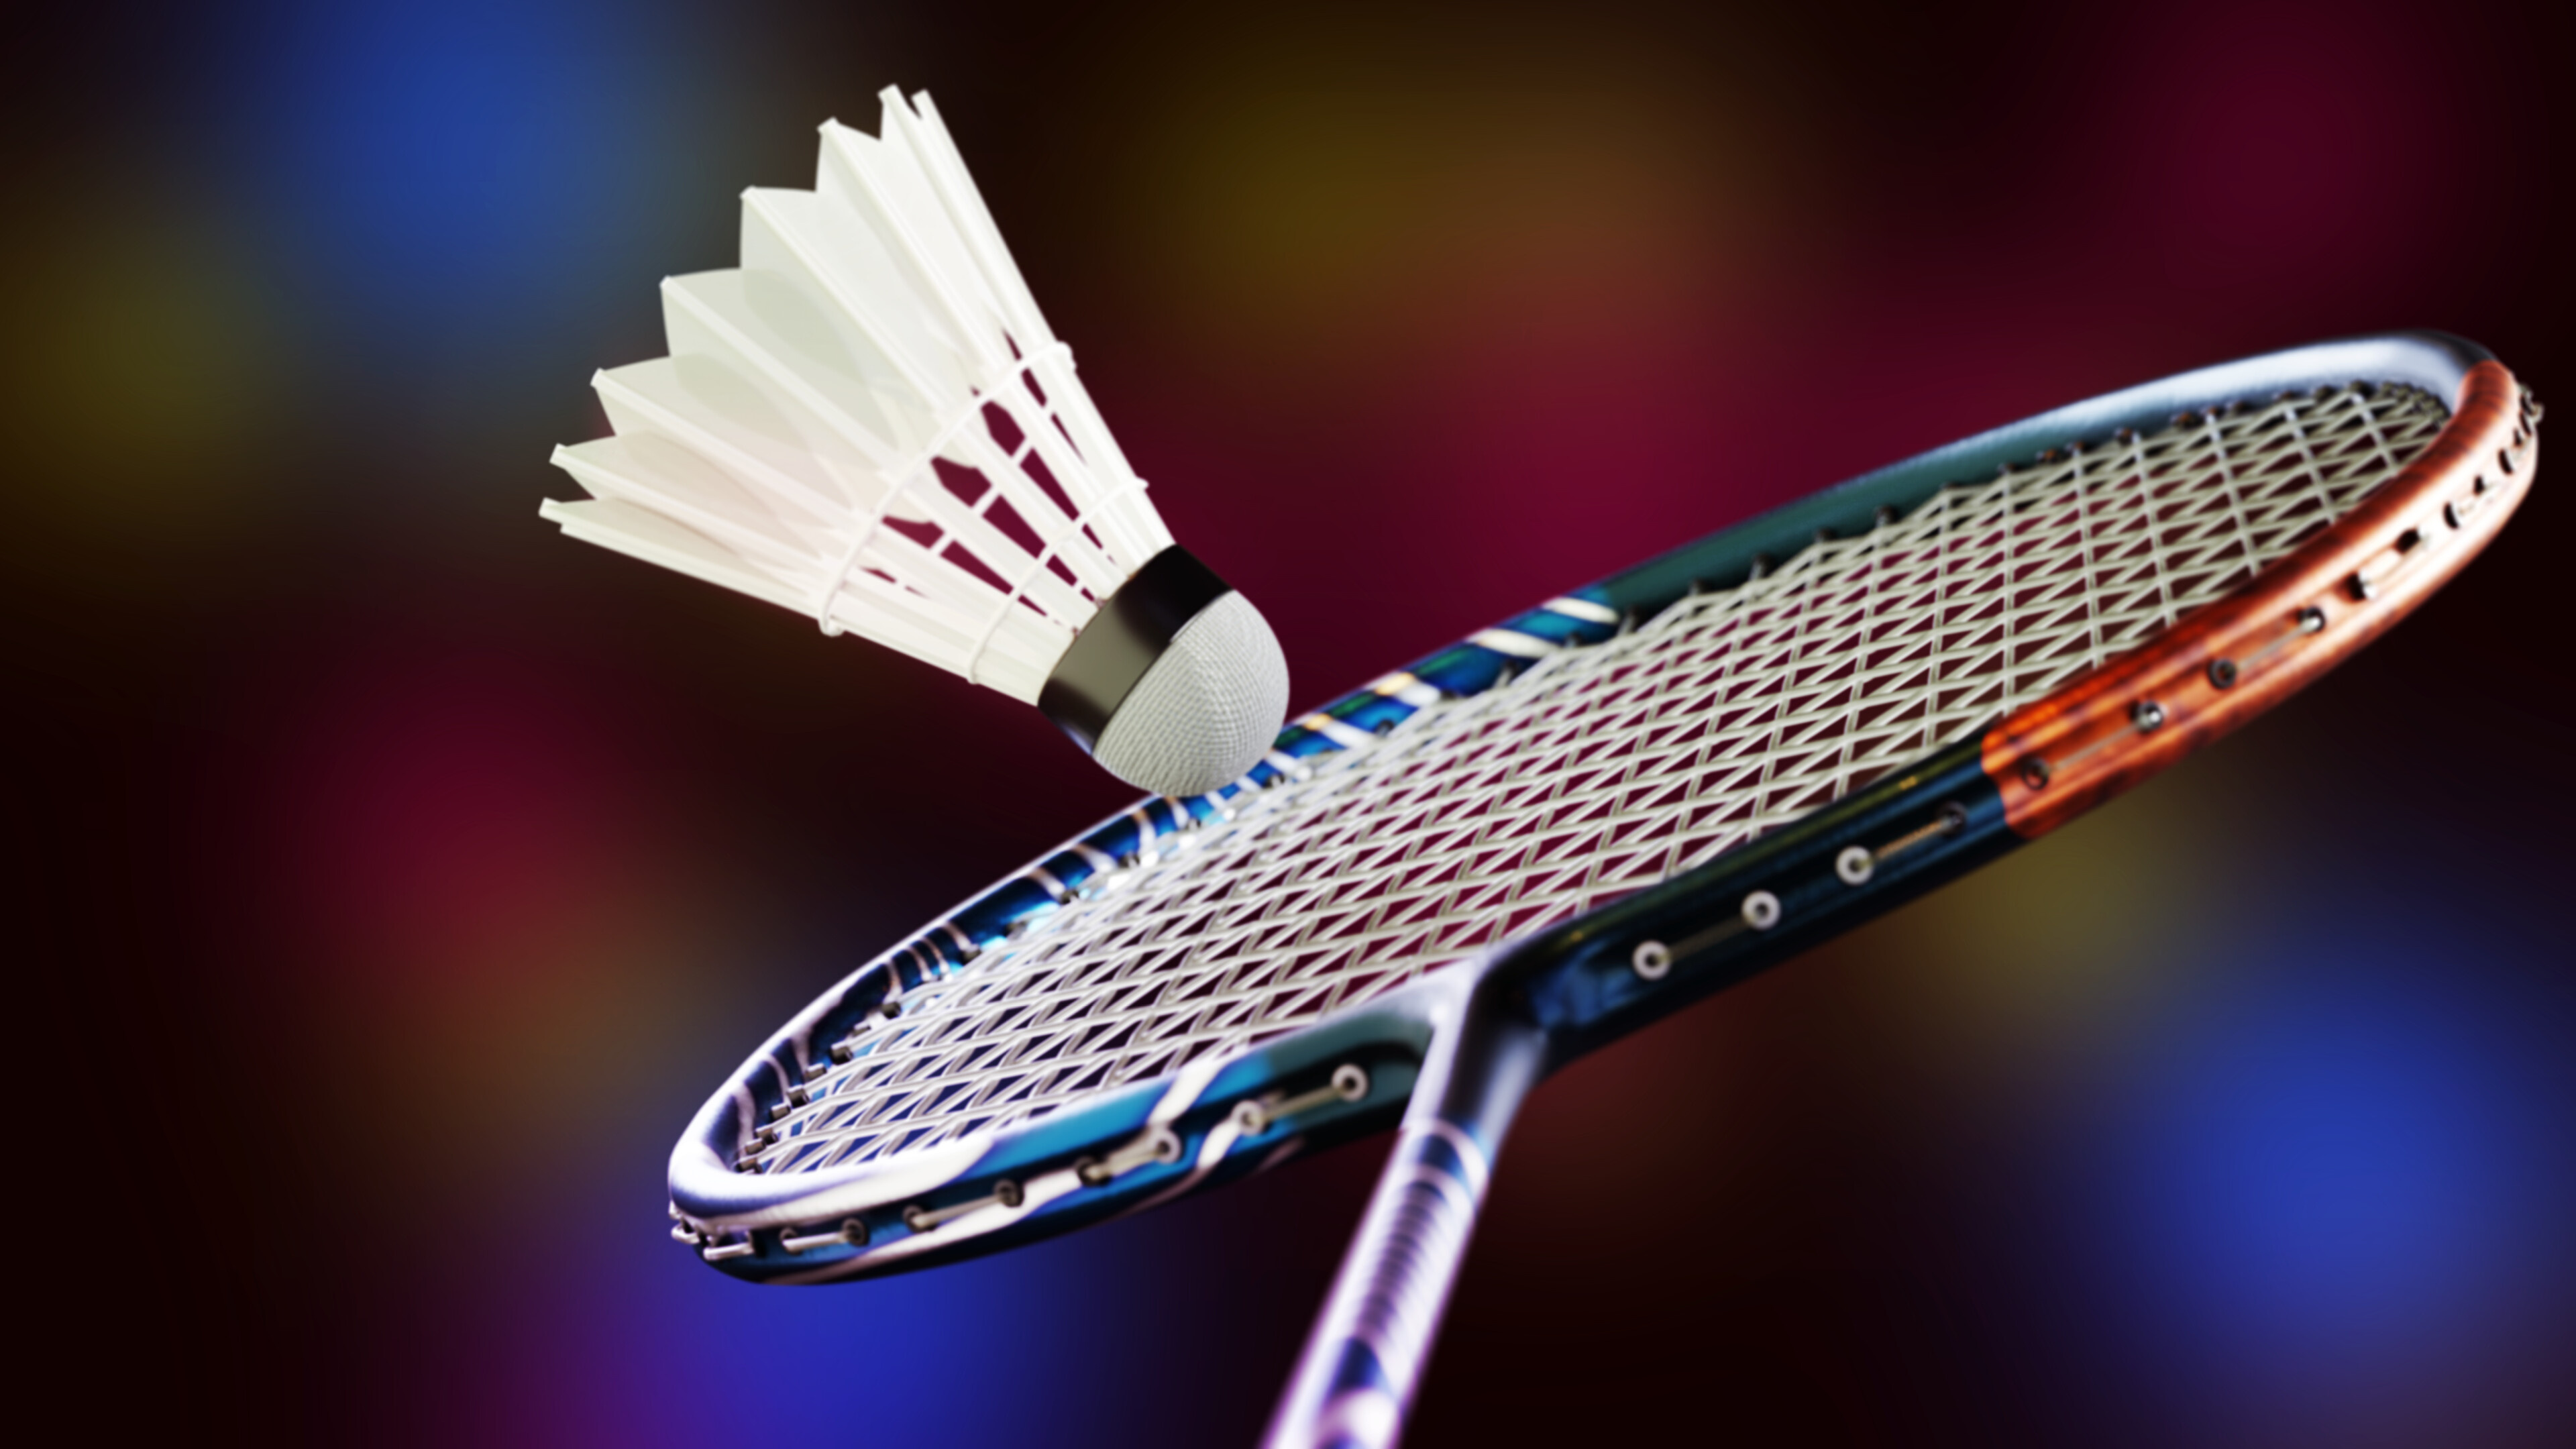 Creative badminton projects, Blender artists community, Stunning designs, Artistic expressions, 3840x2160 4K Desktop